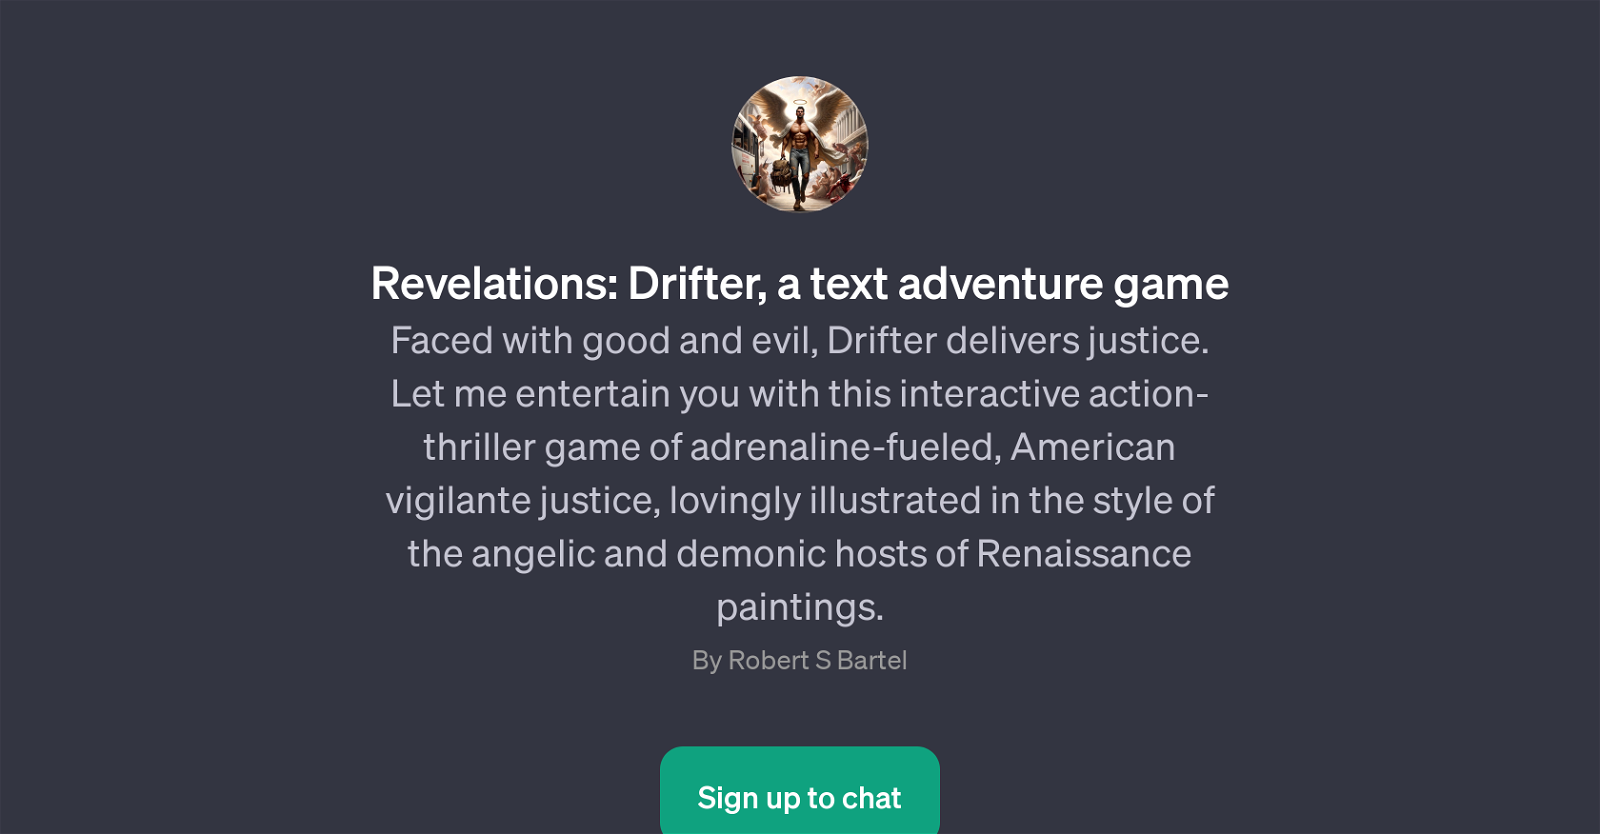 Revelations: Drifter website